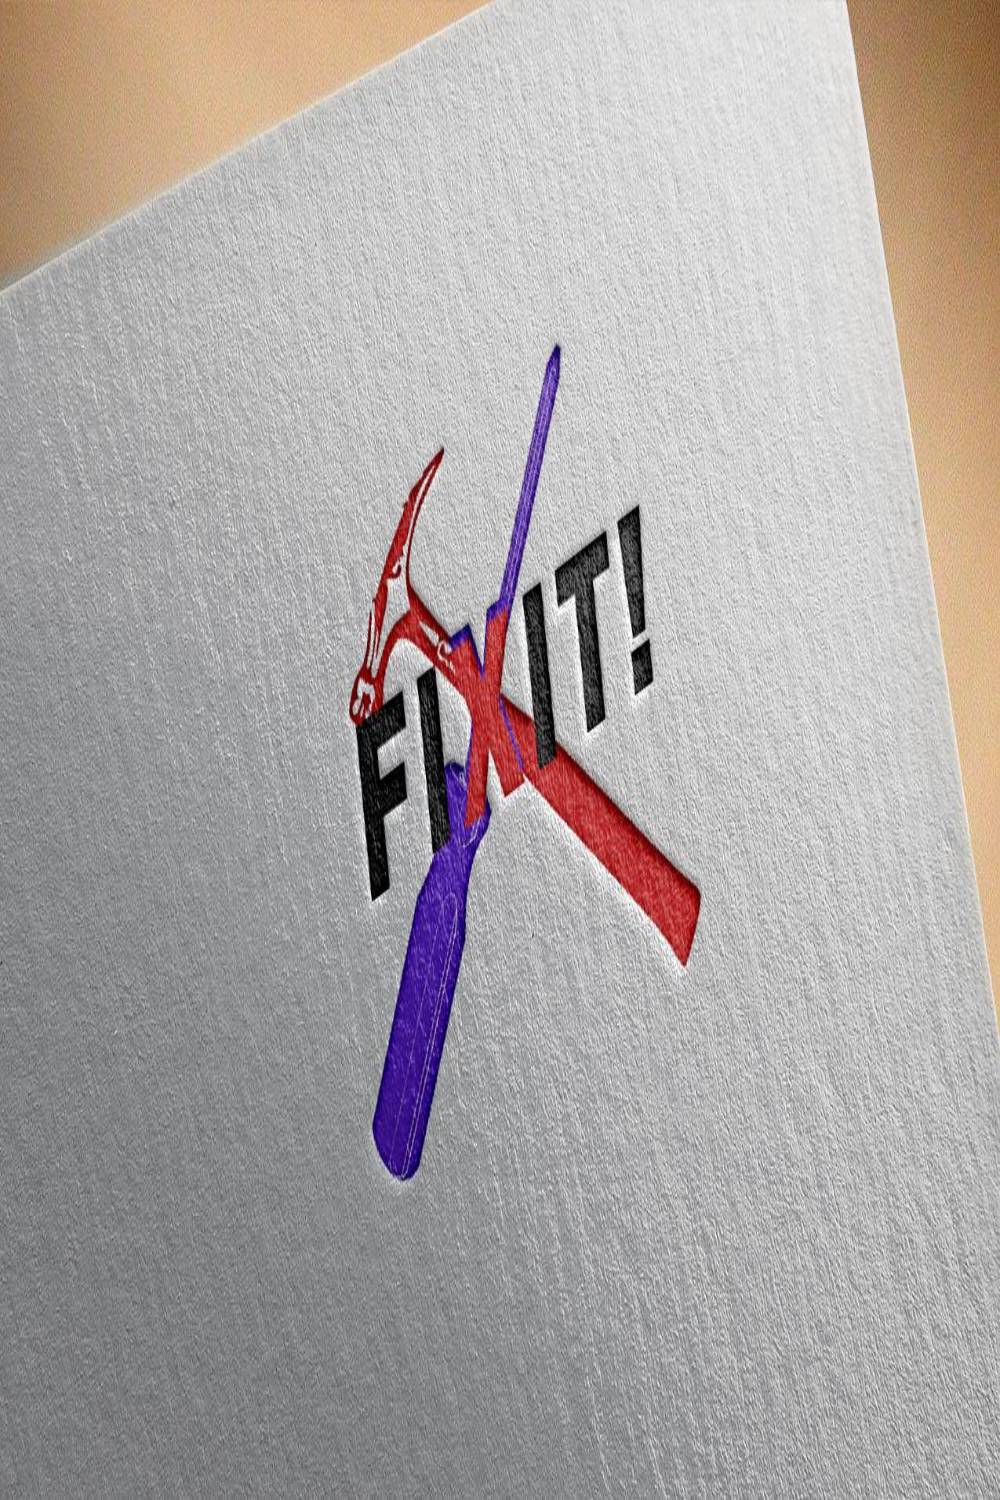 Fixit Architecture Logo Design pinterest image.